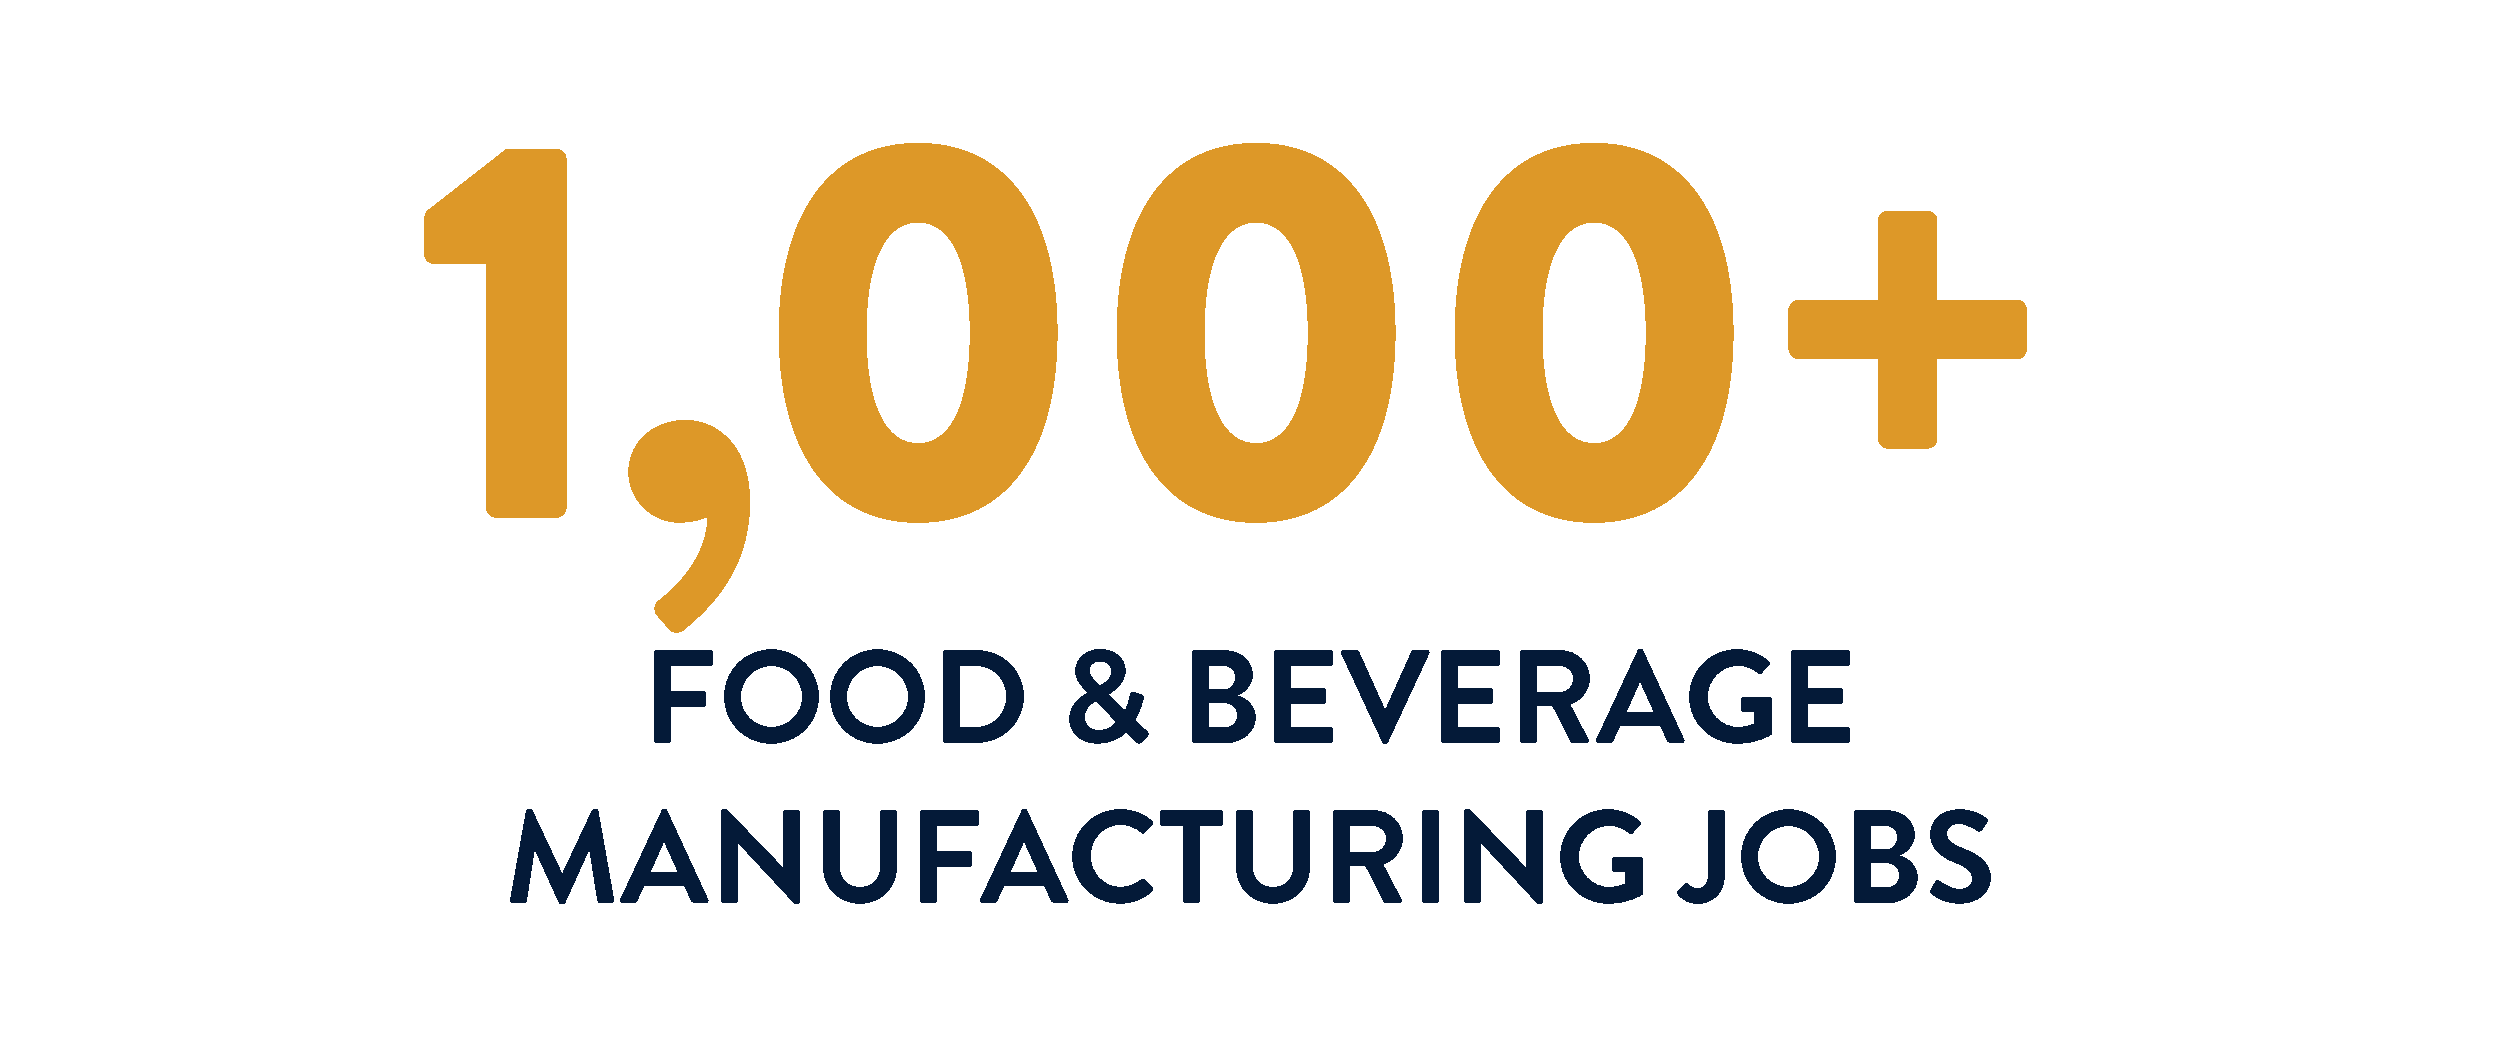 1000+ food & beverage manufacturing jobs